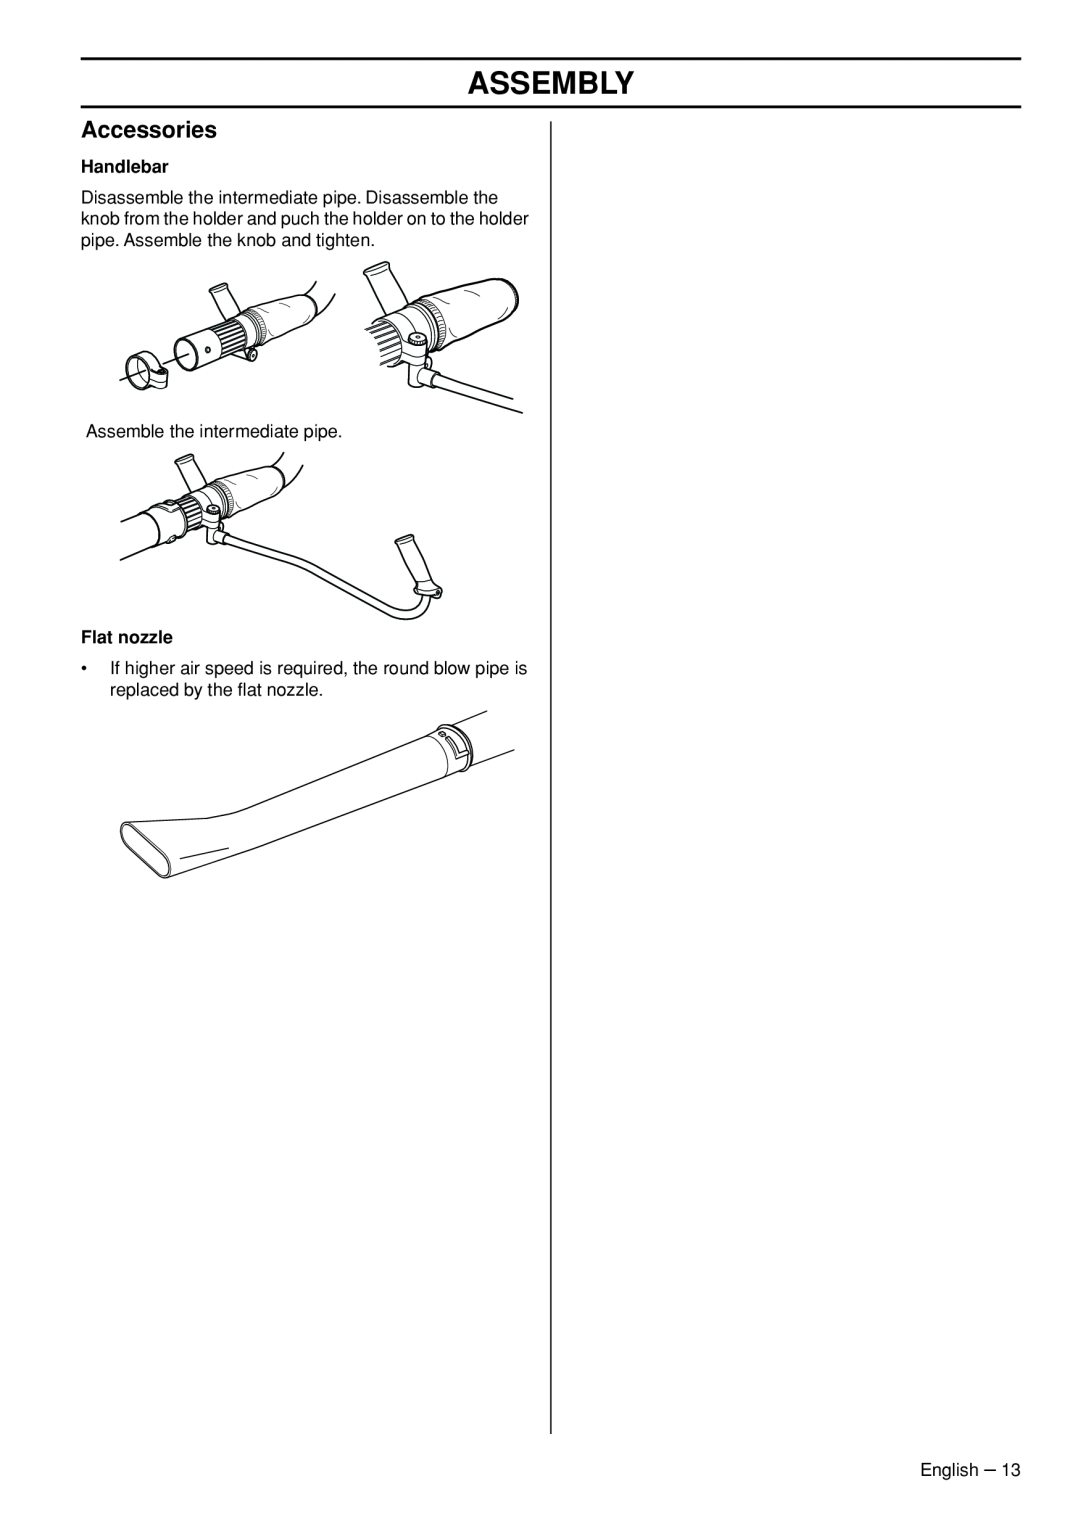 Husqvarna 1153191-26 manual Accessories, Assembly, Handlebar, Flat nozzle 